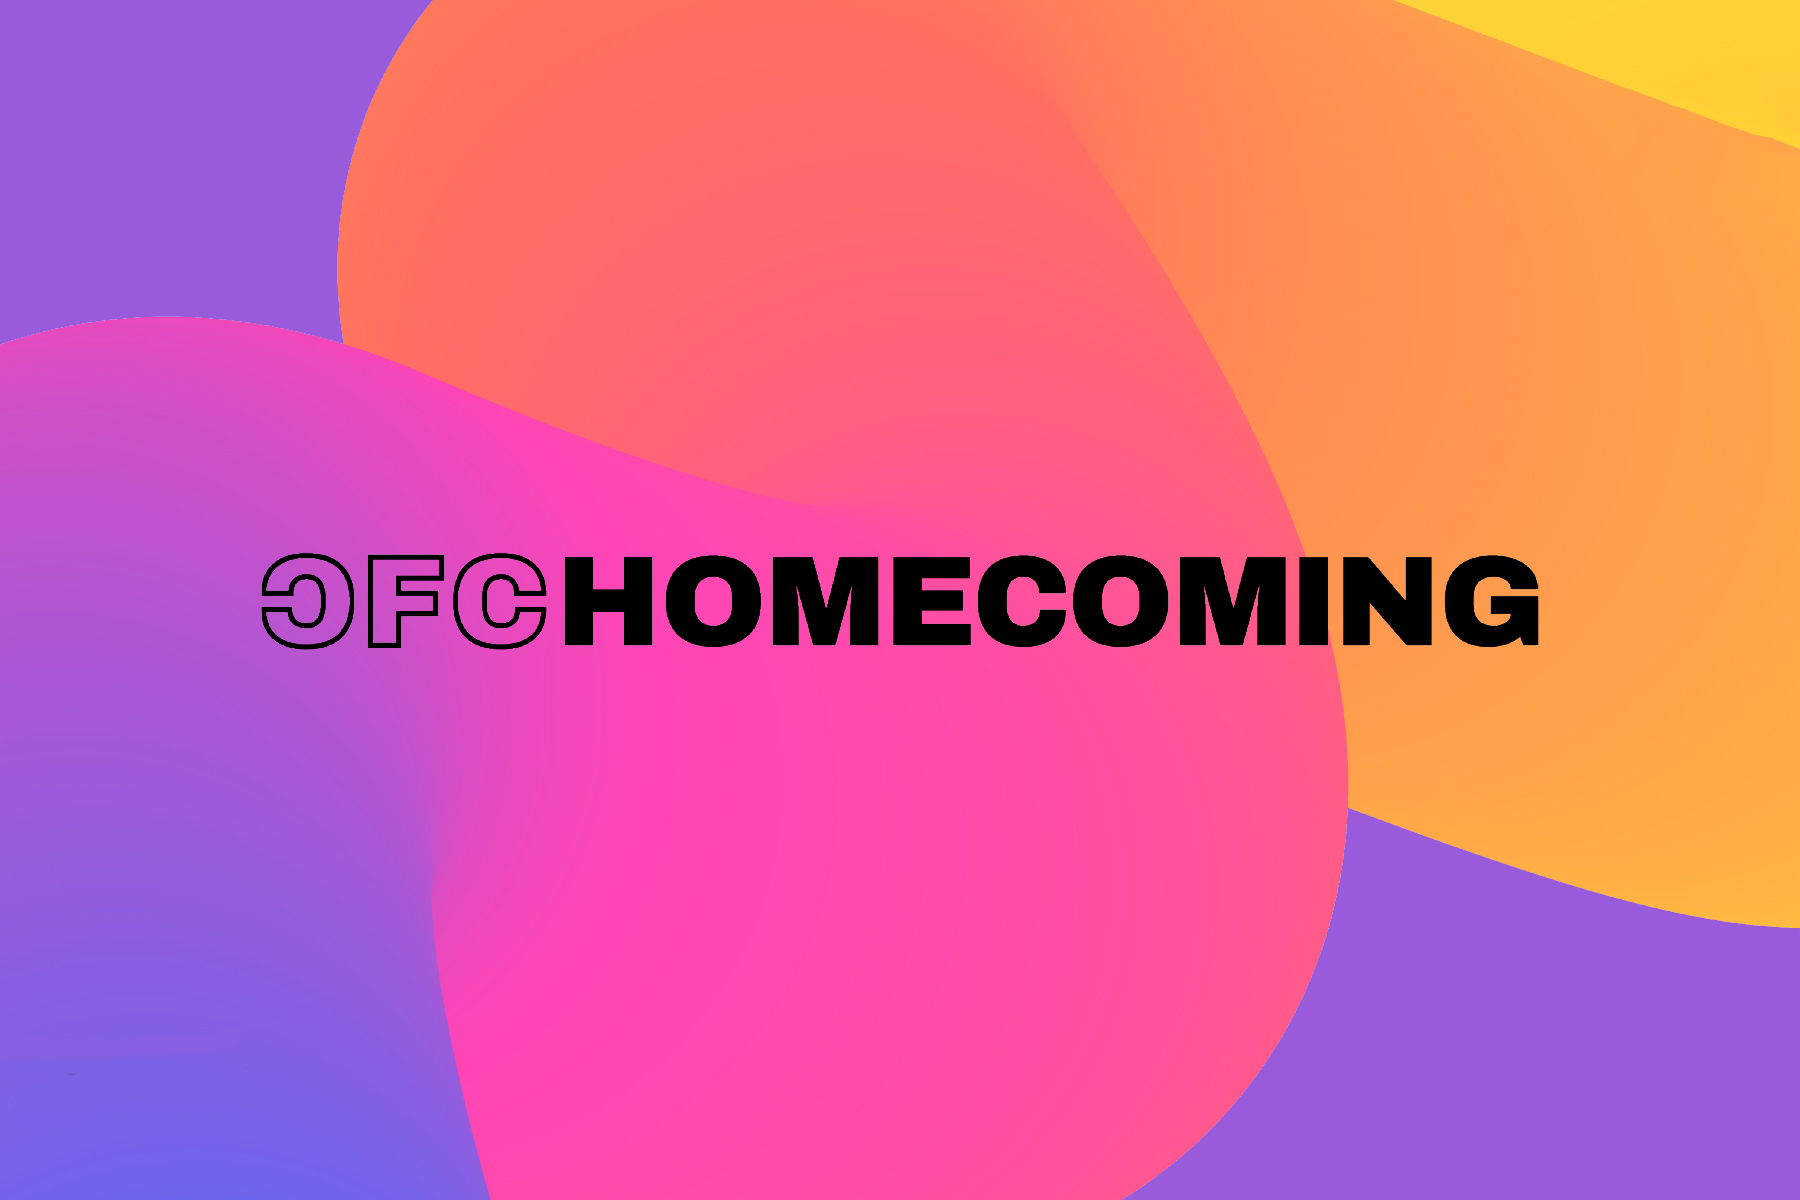 CFC Homecoming